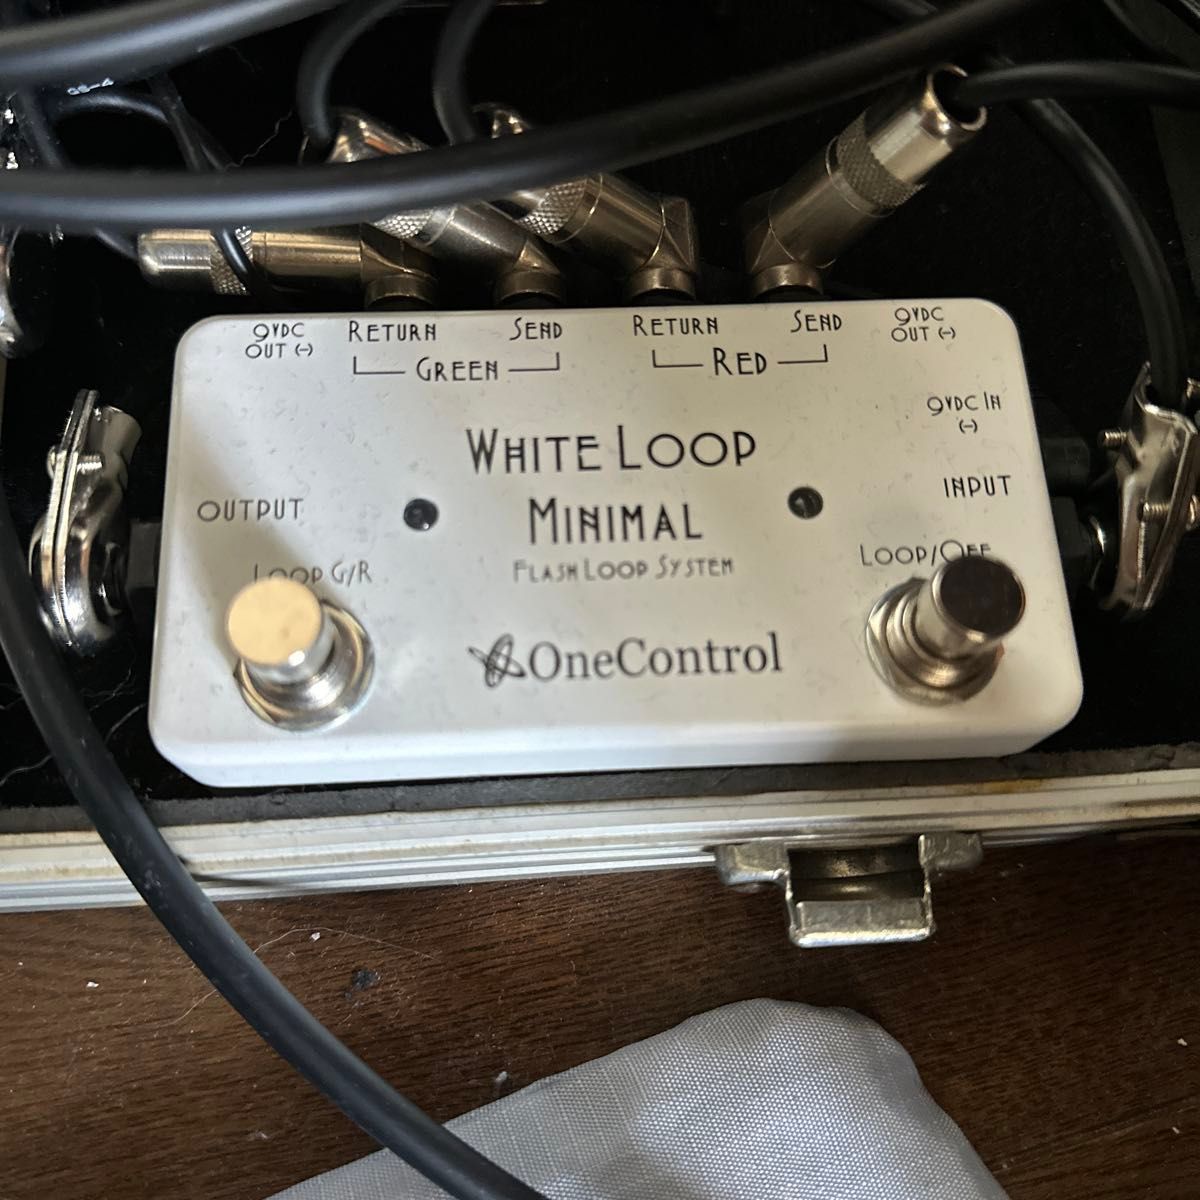 One Contrnl White Loop MINIMAL